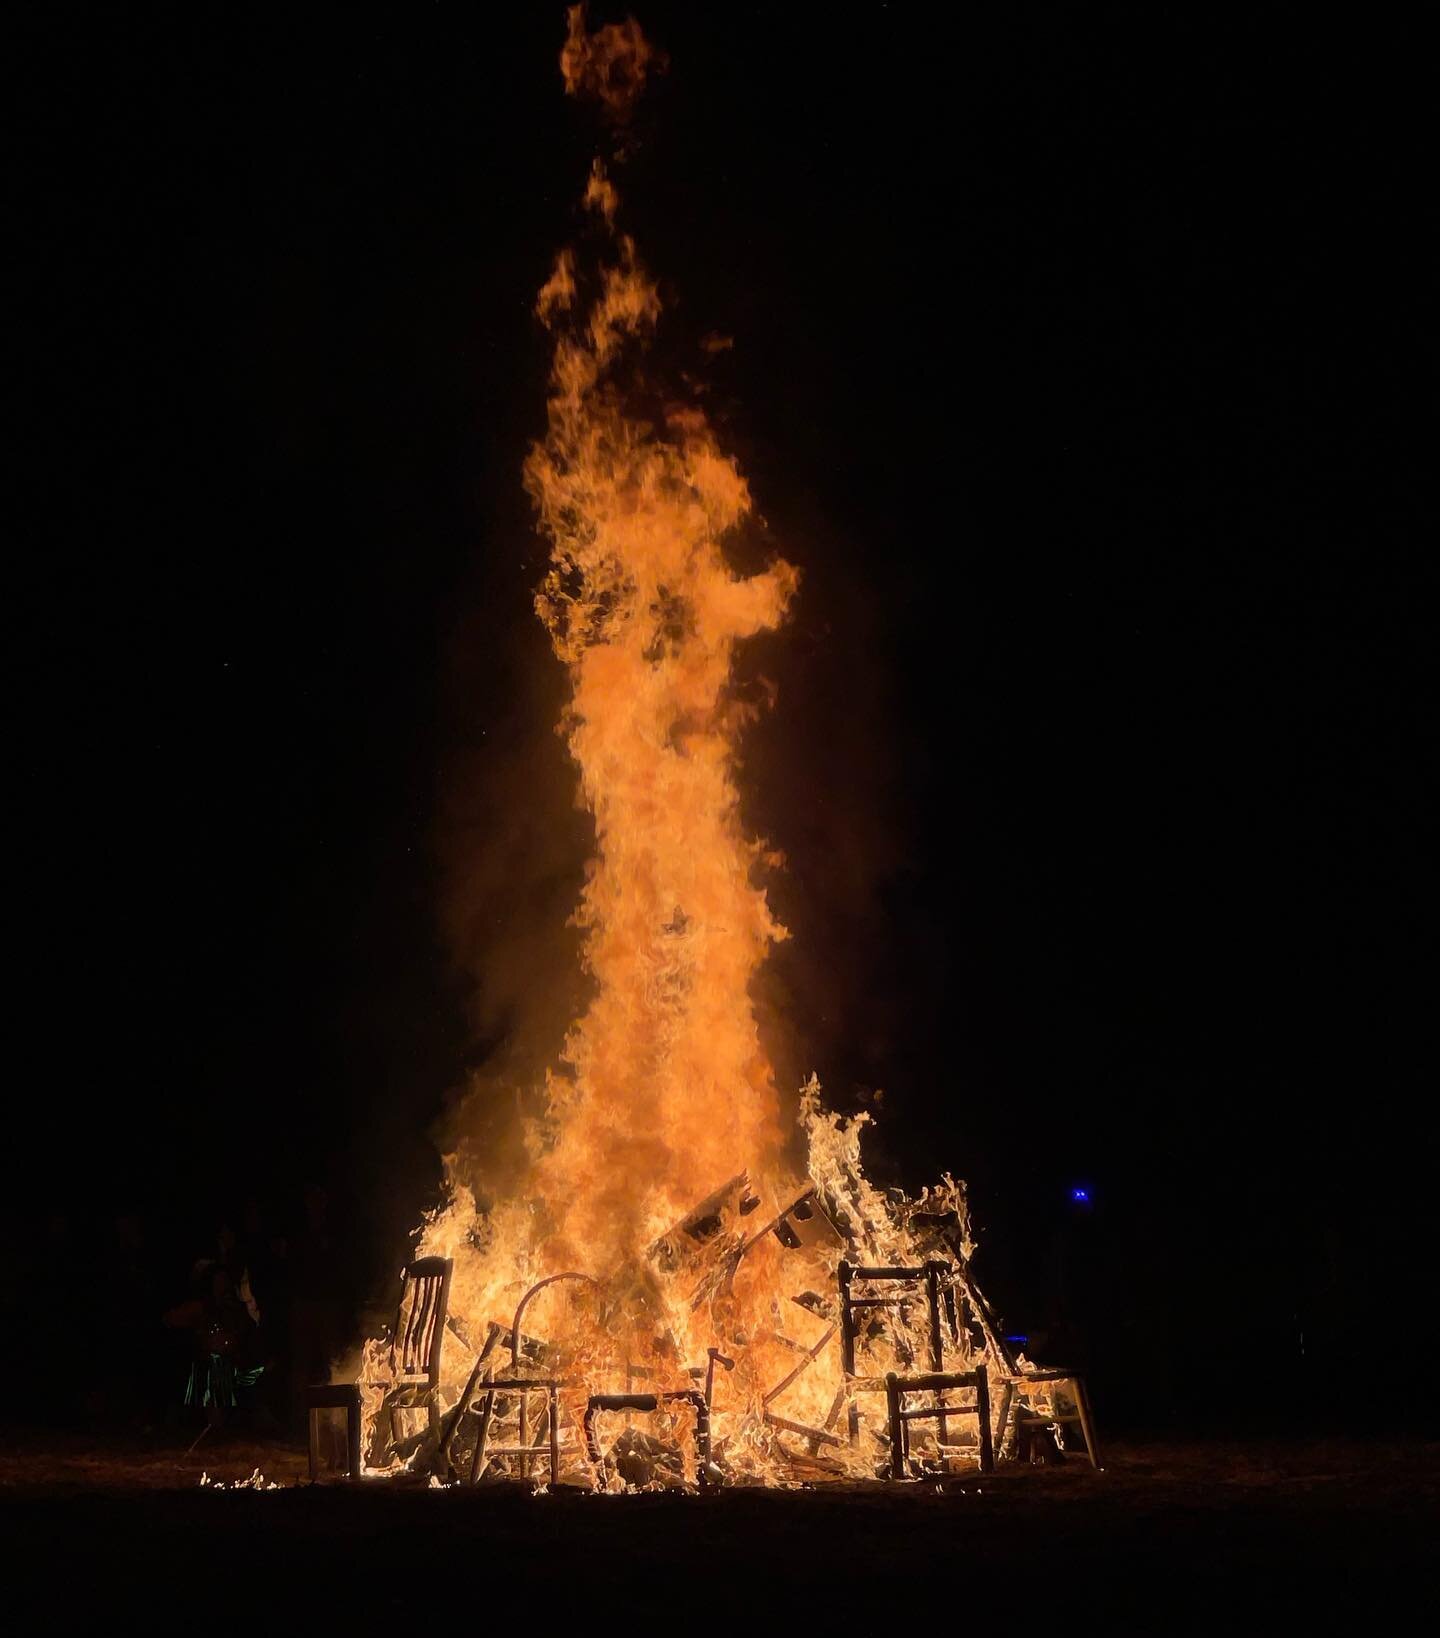 Thinking about the next burn 
.
.
.
.
.
#freezerburn #burningman #burn #fire #effigy